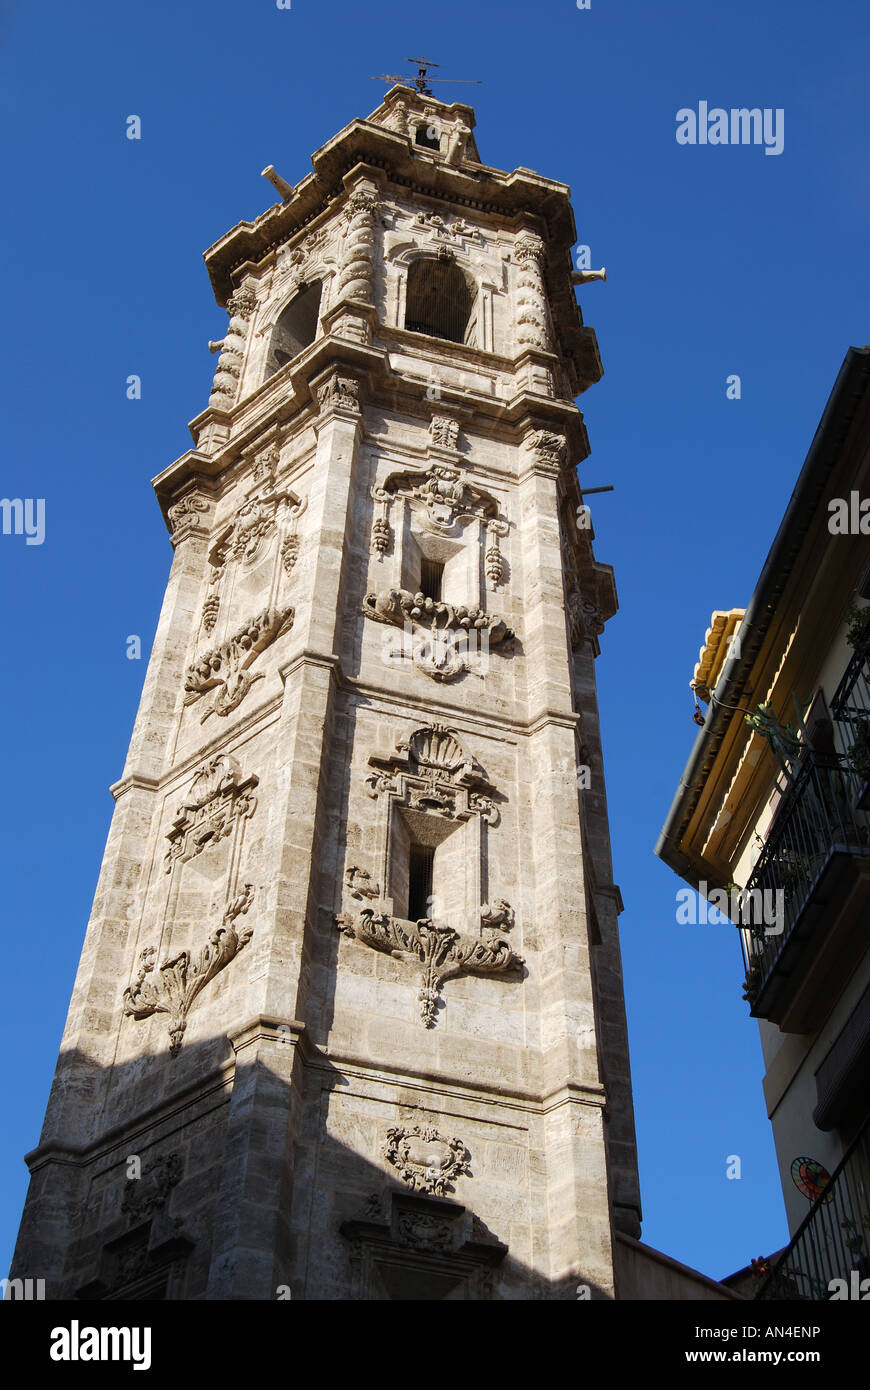 La tour de Miguelete, Plaza de la Reina, Valencia, Costa del Azahar, Valencia Province, Espagne Banque D'Images